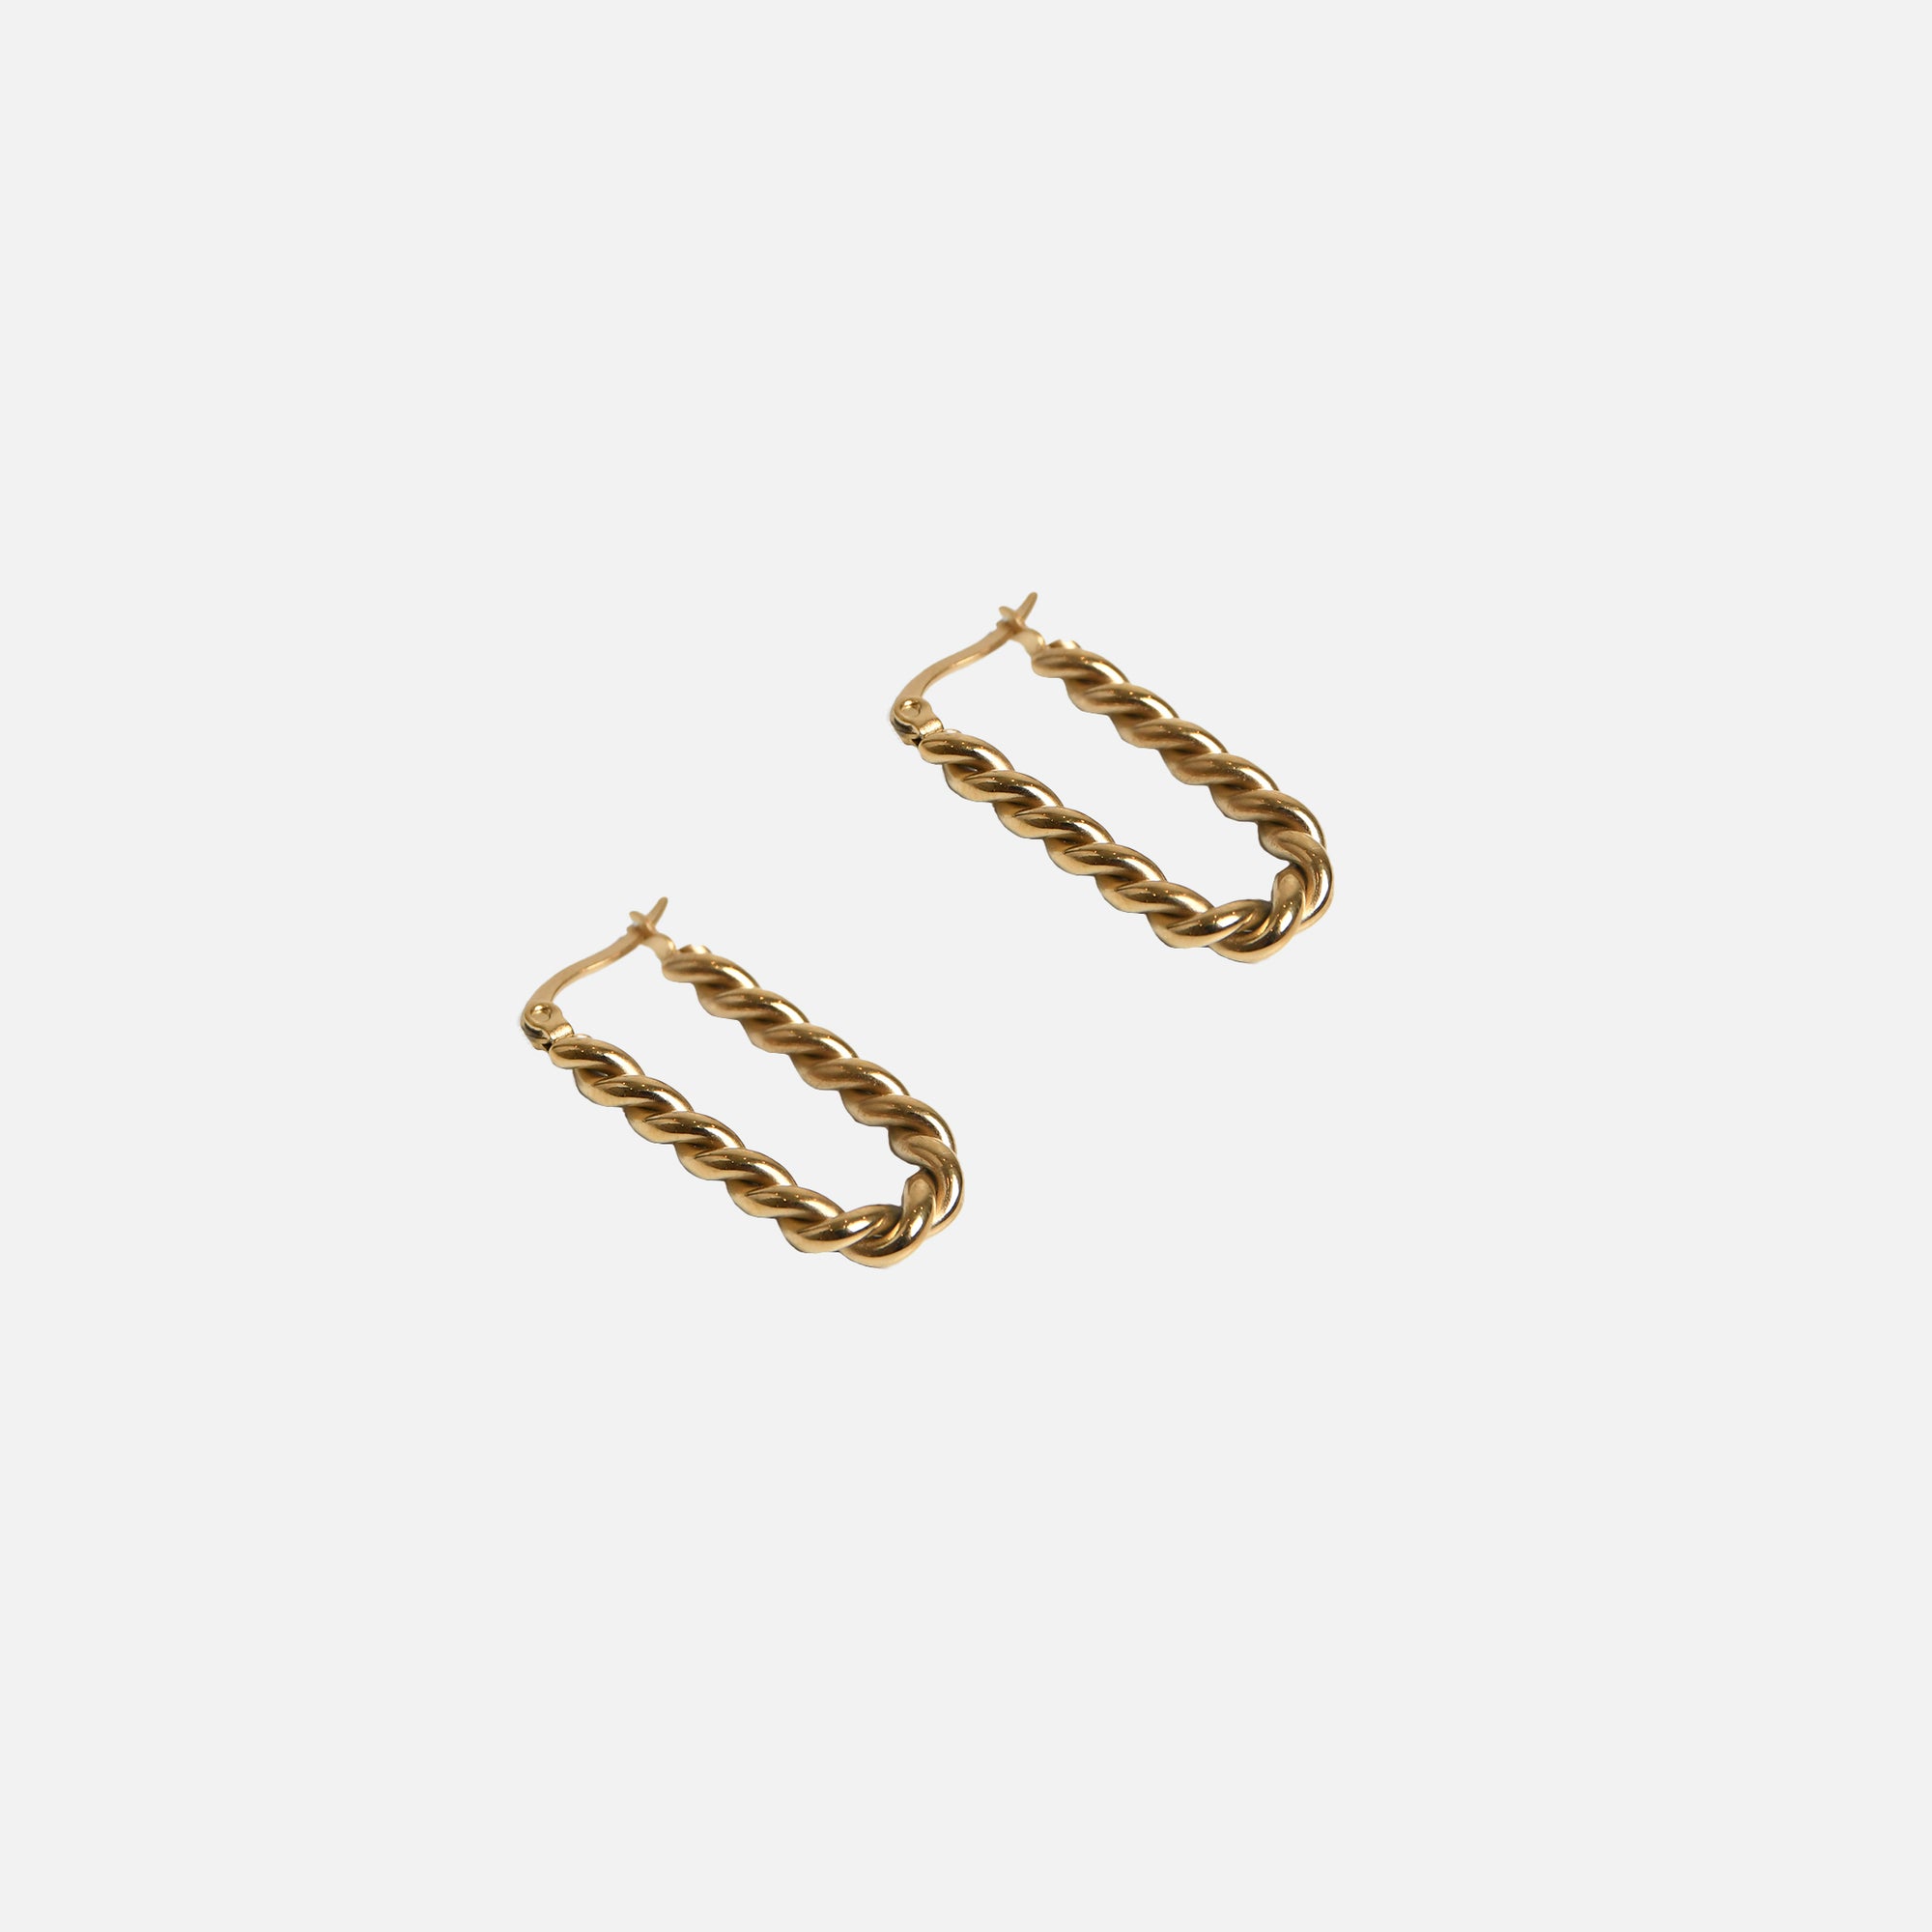 Golden twisted oval earrings in stainless steel